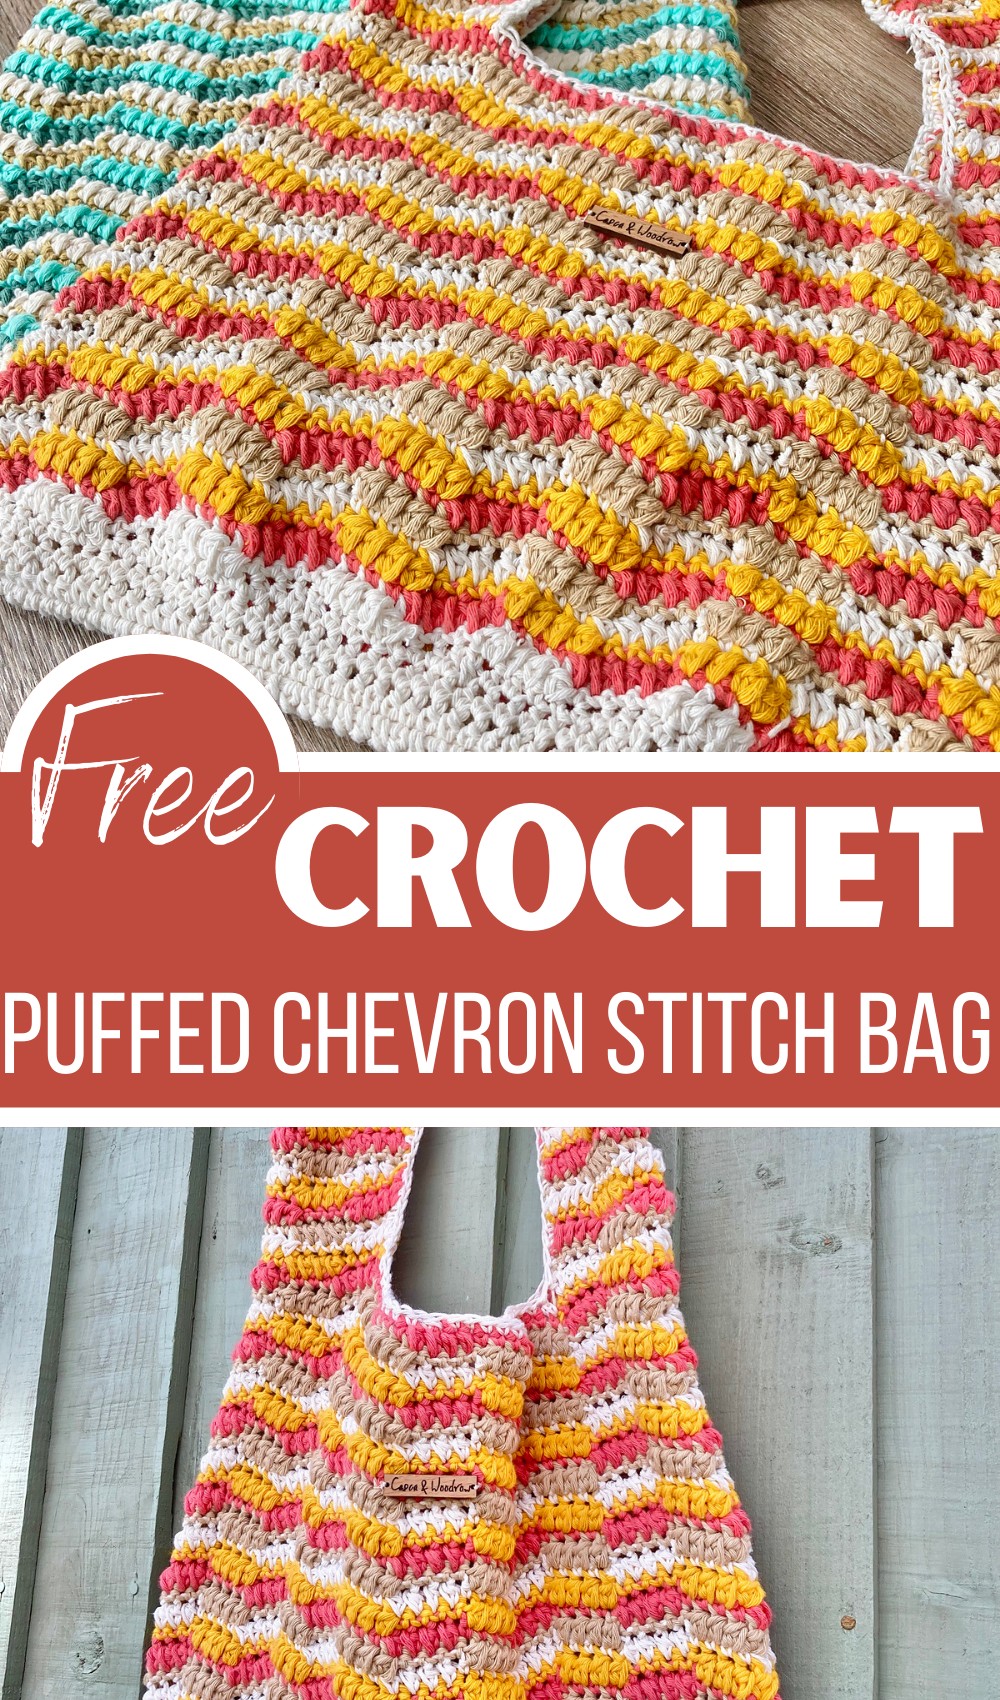 Puffed Chevron Stitch Bag